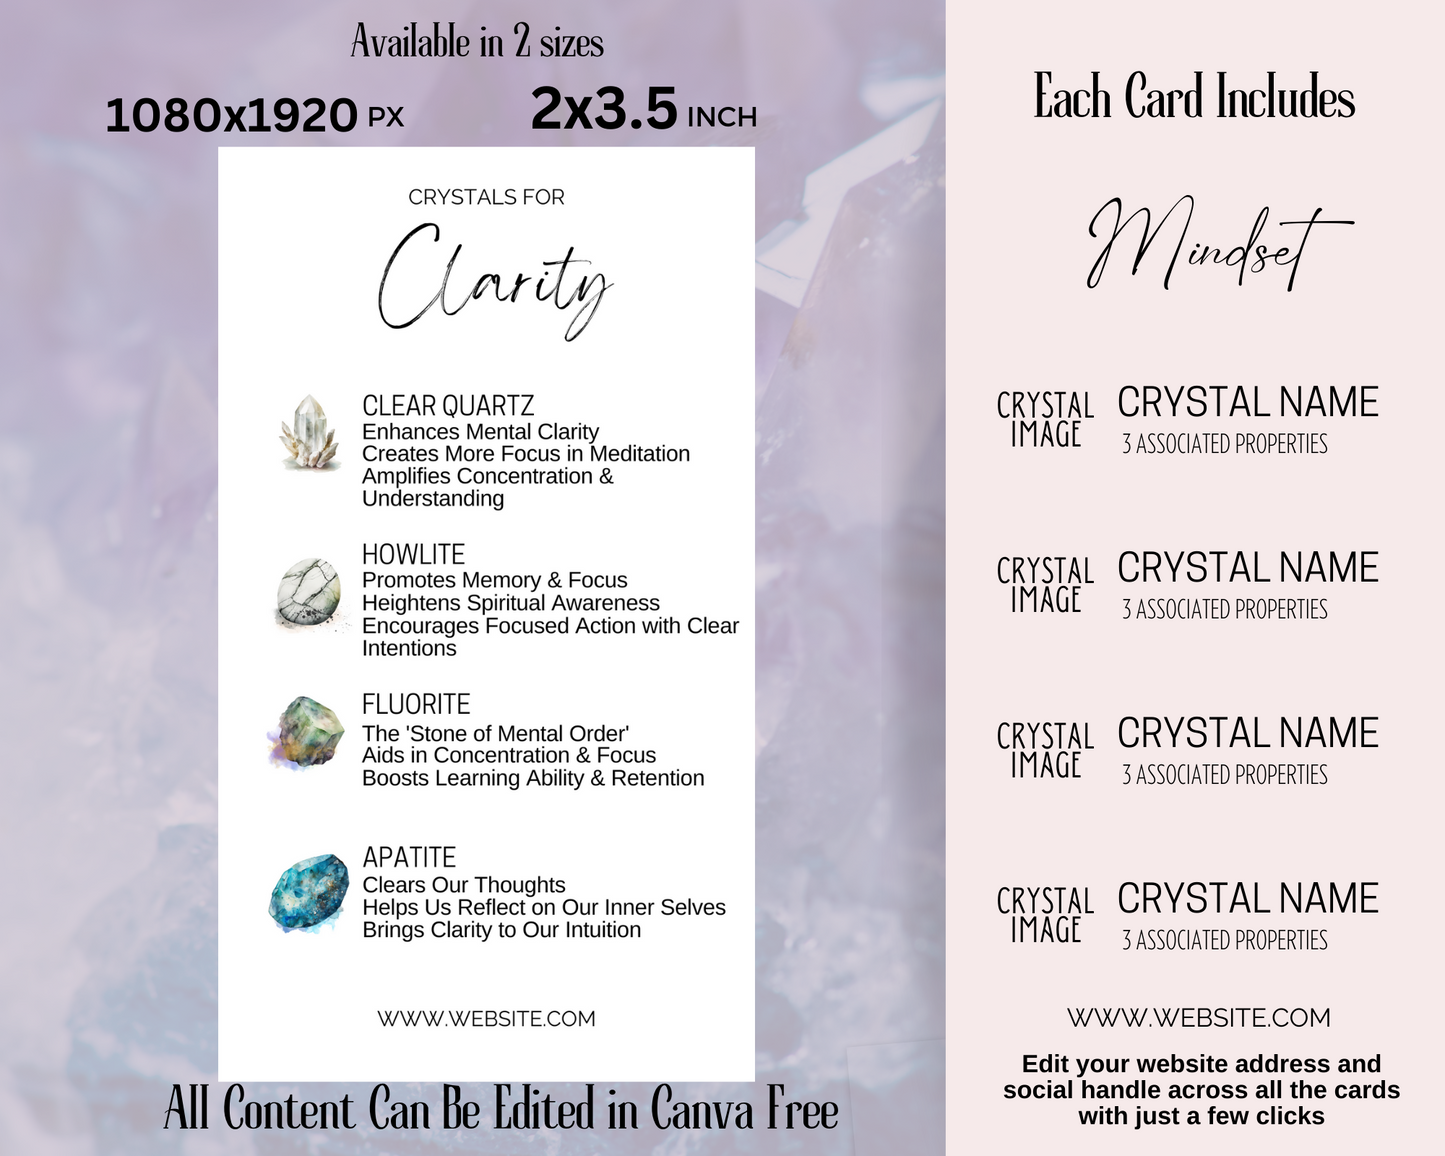 32 Crystals for Mindset Cards, Editable Crystal Kit Cards Set Business Card Size